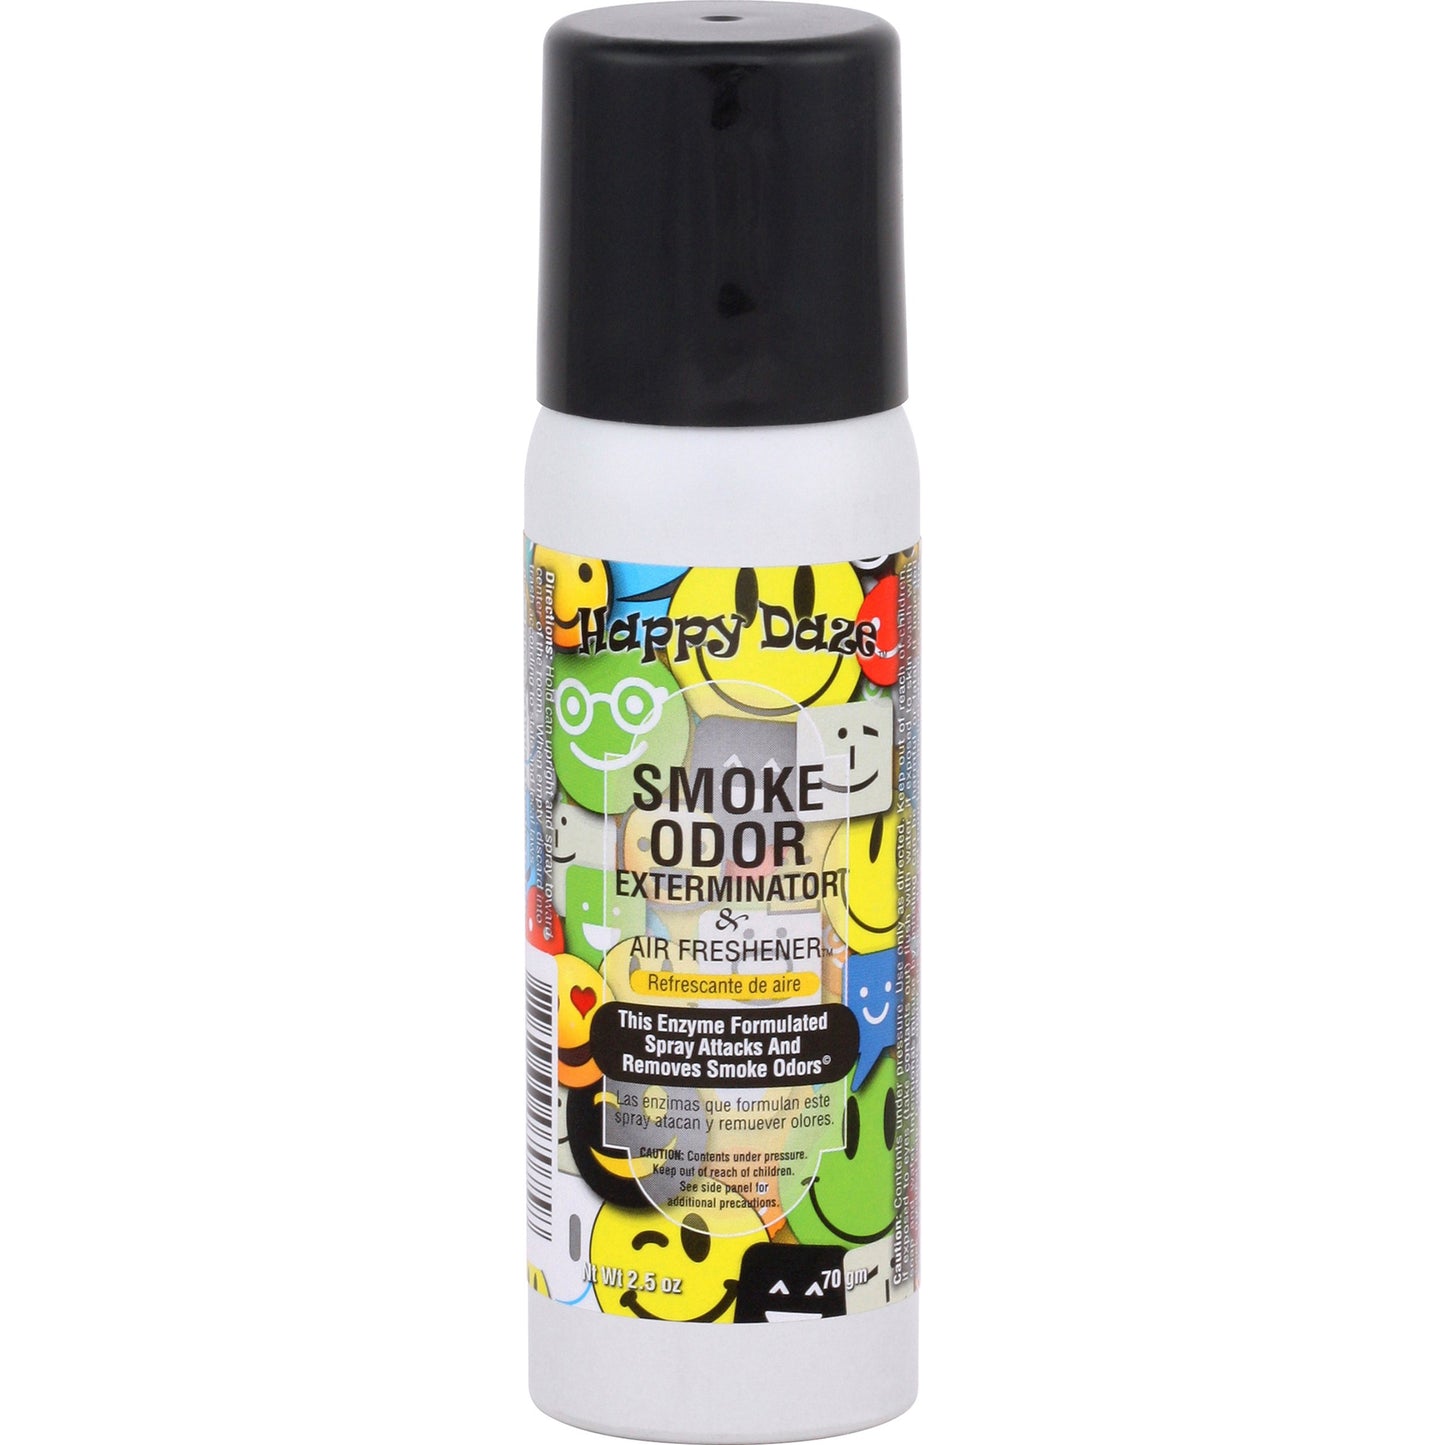 Smoke Odor Exterminator Mini Spray 2.5oz - Happy Daze